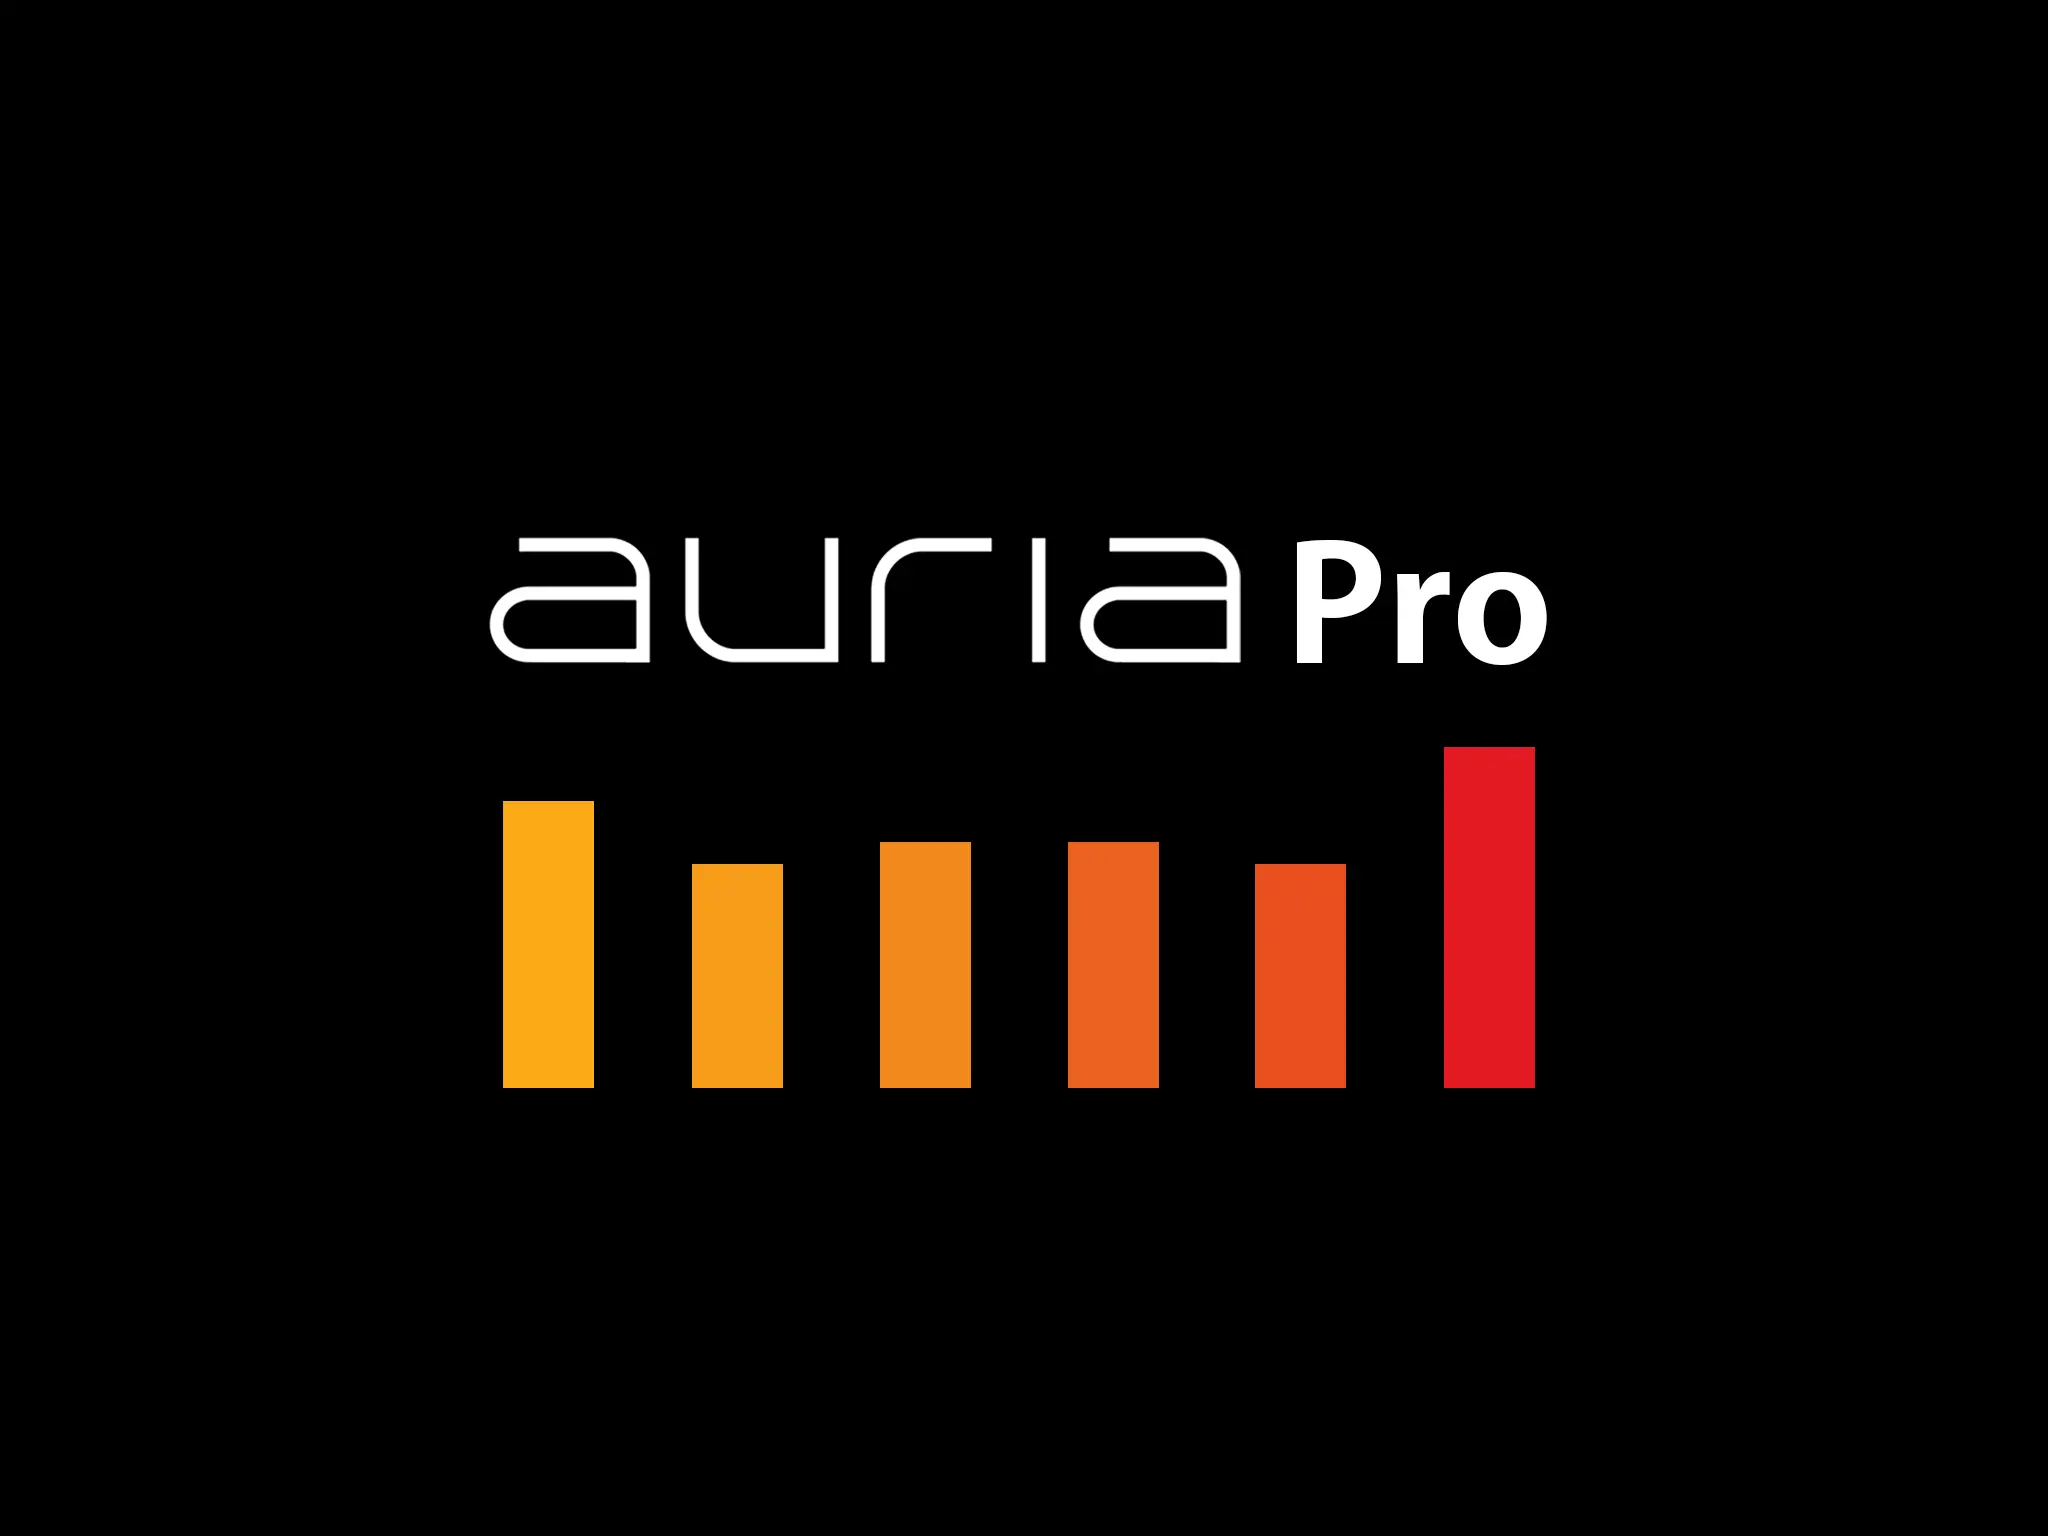 Auria Pro